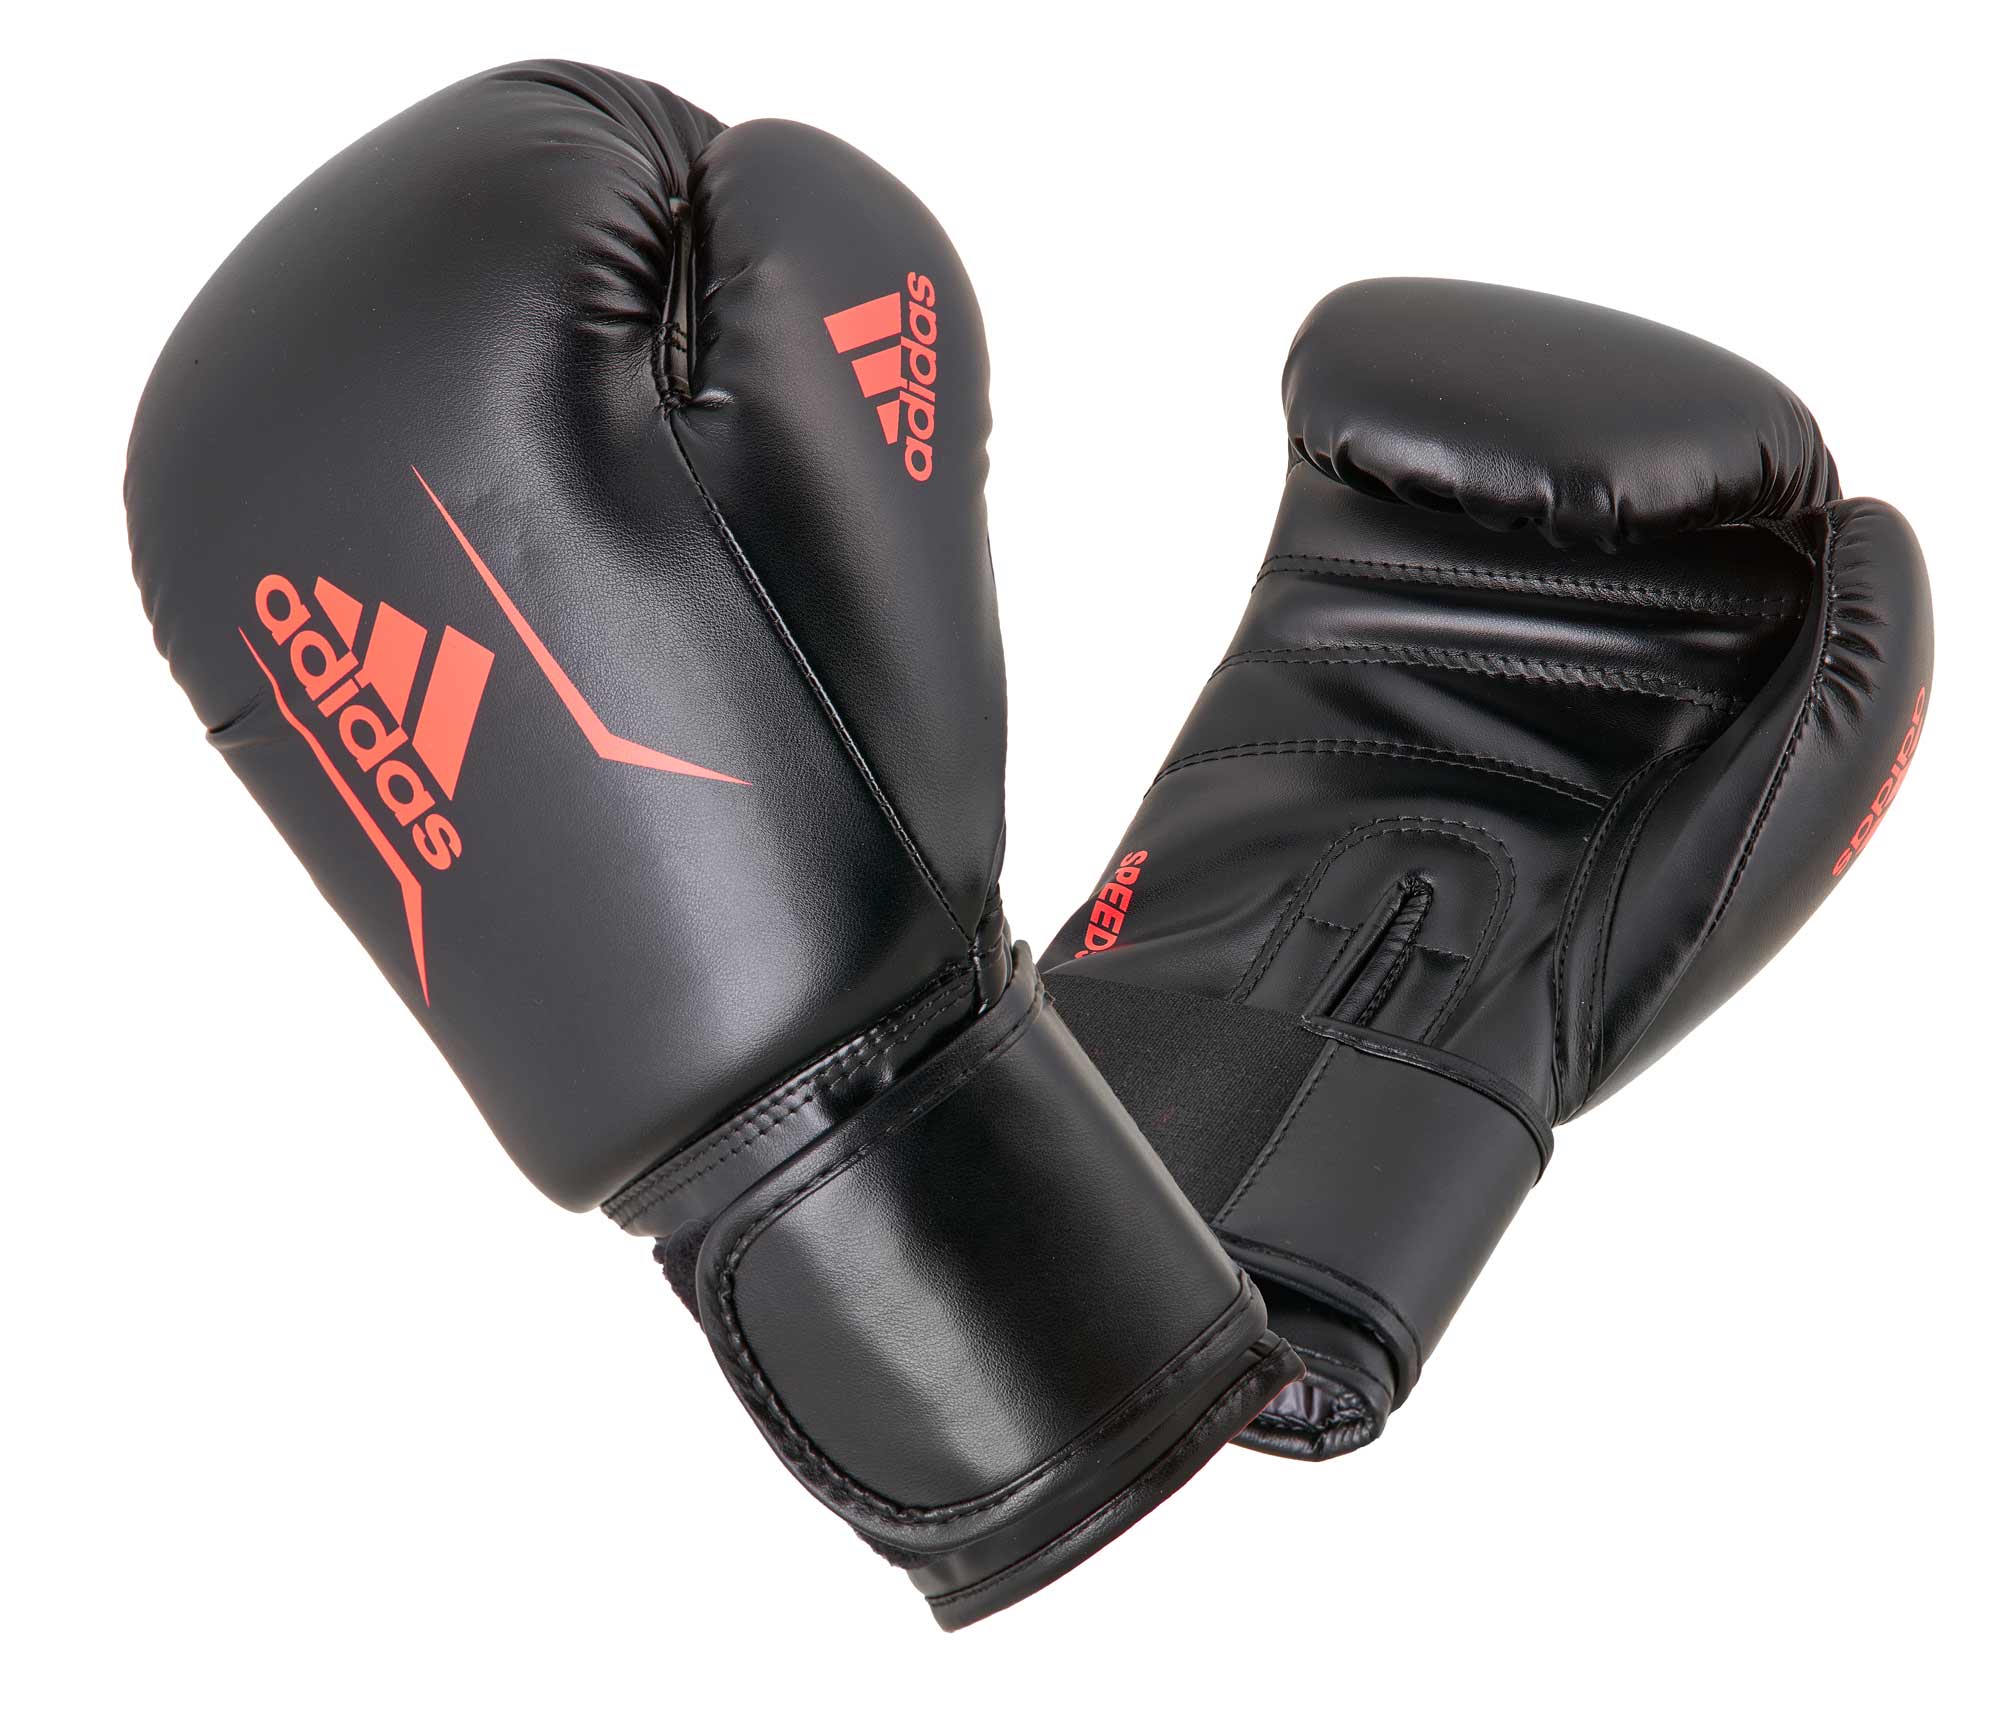 adidas boxing glove Speed 50 ADISBG50, black/red